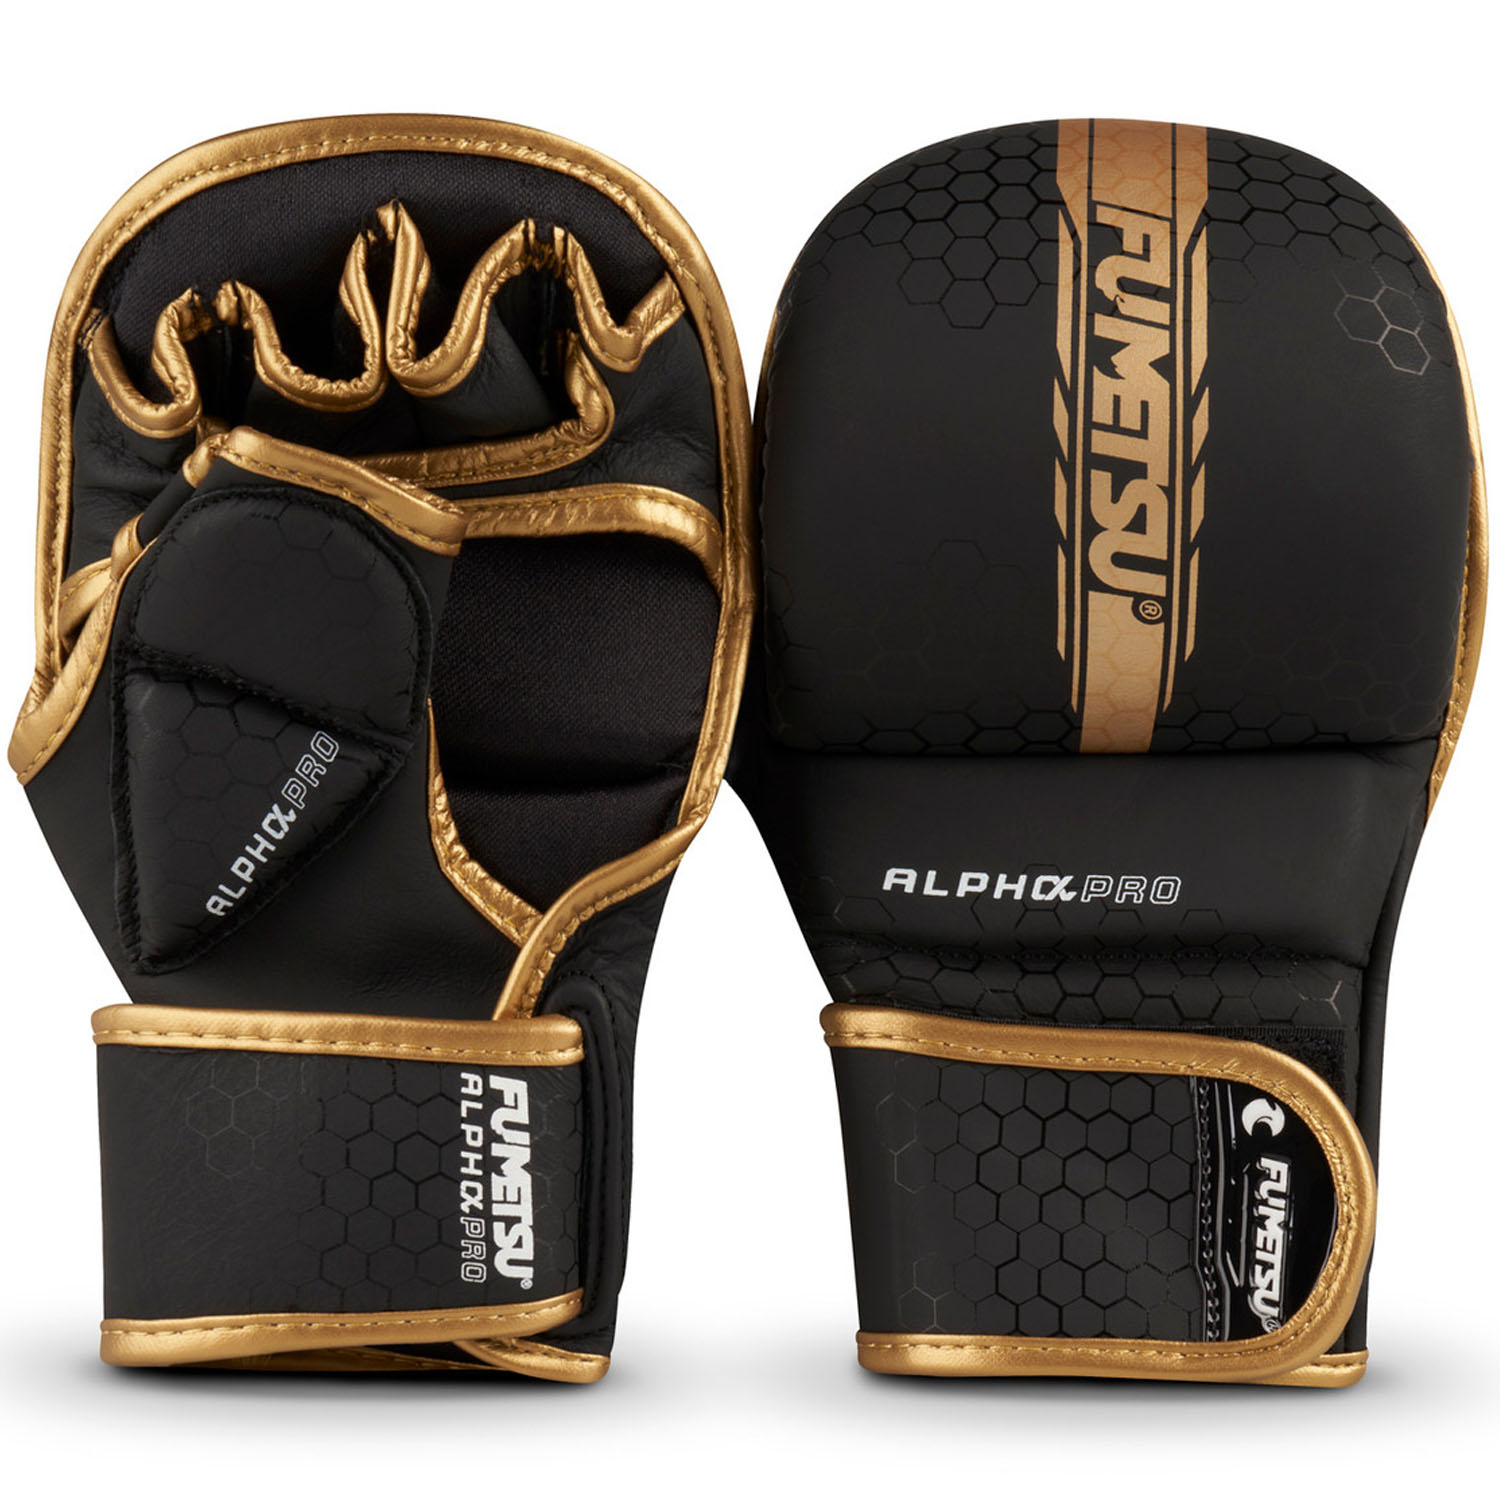 Fumetsu MMA Sparring Boxing Gloves, Alpha Pro, black-gold, L/XL